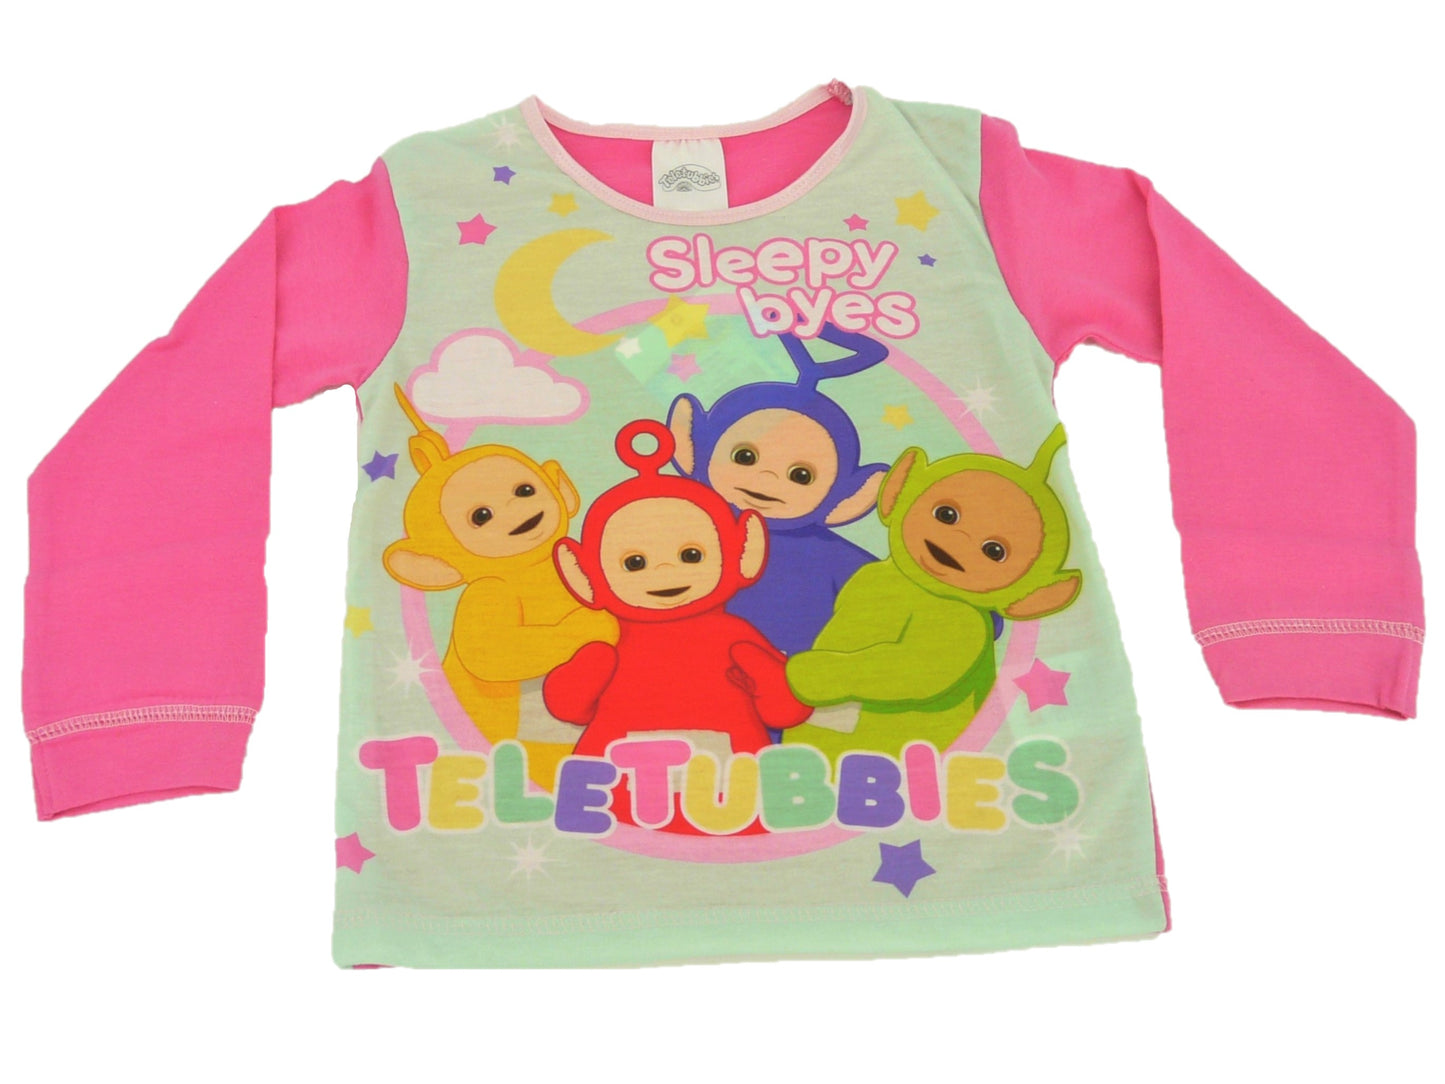 Teletubbies "Sleepy Byes" Girl's Cotton Pyjamas